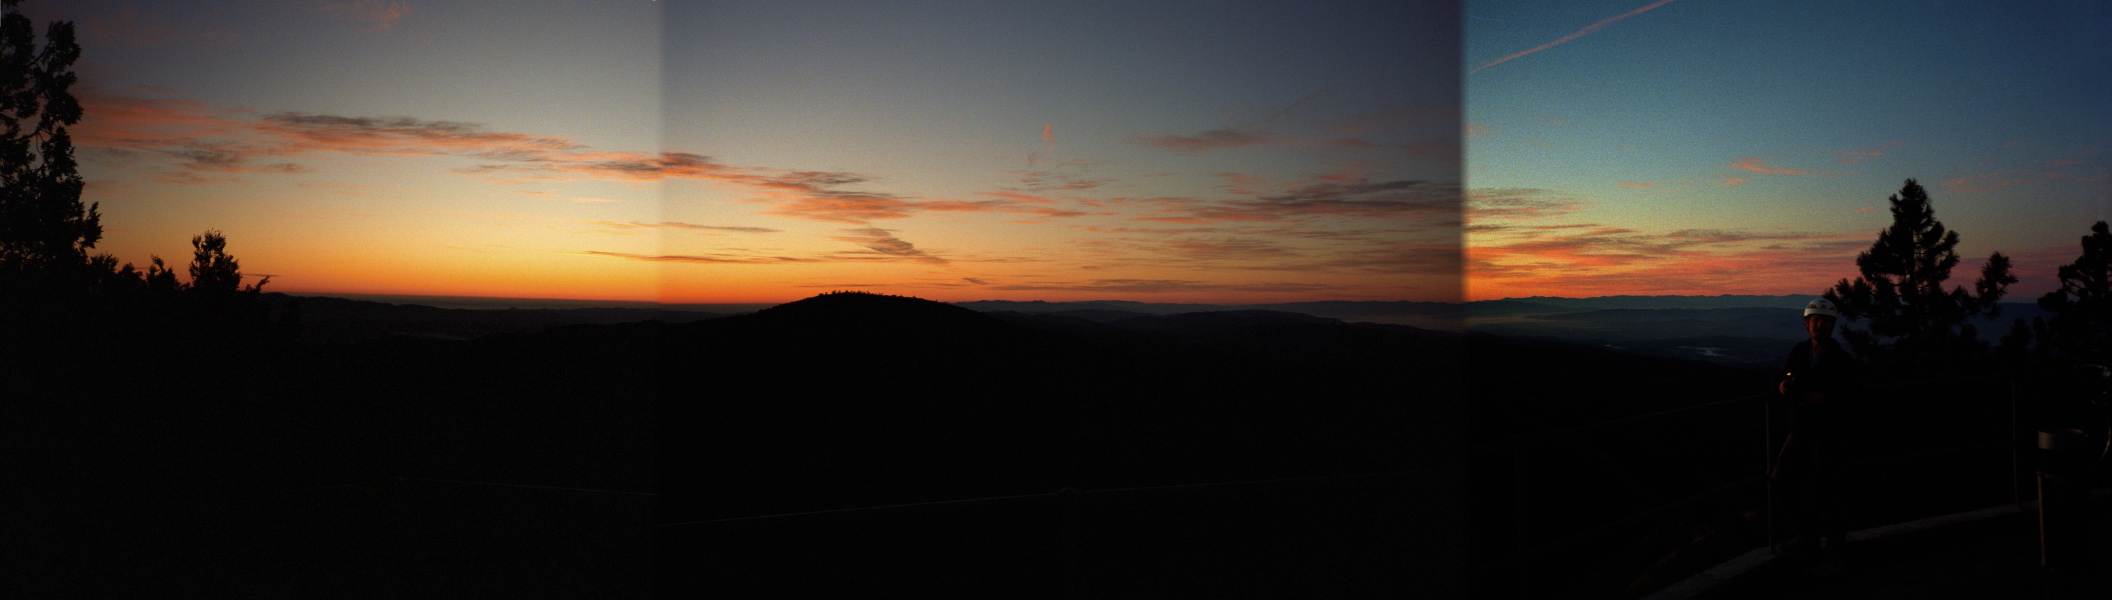 Mt. Hamilton Sunrise Panorama.